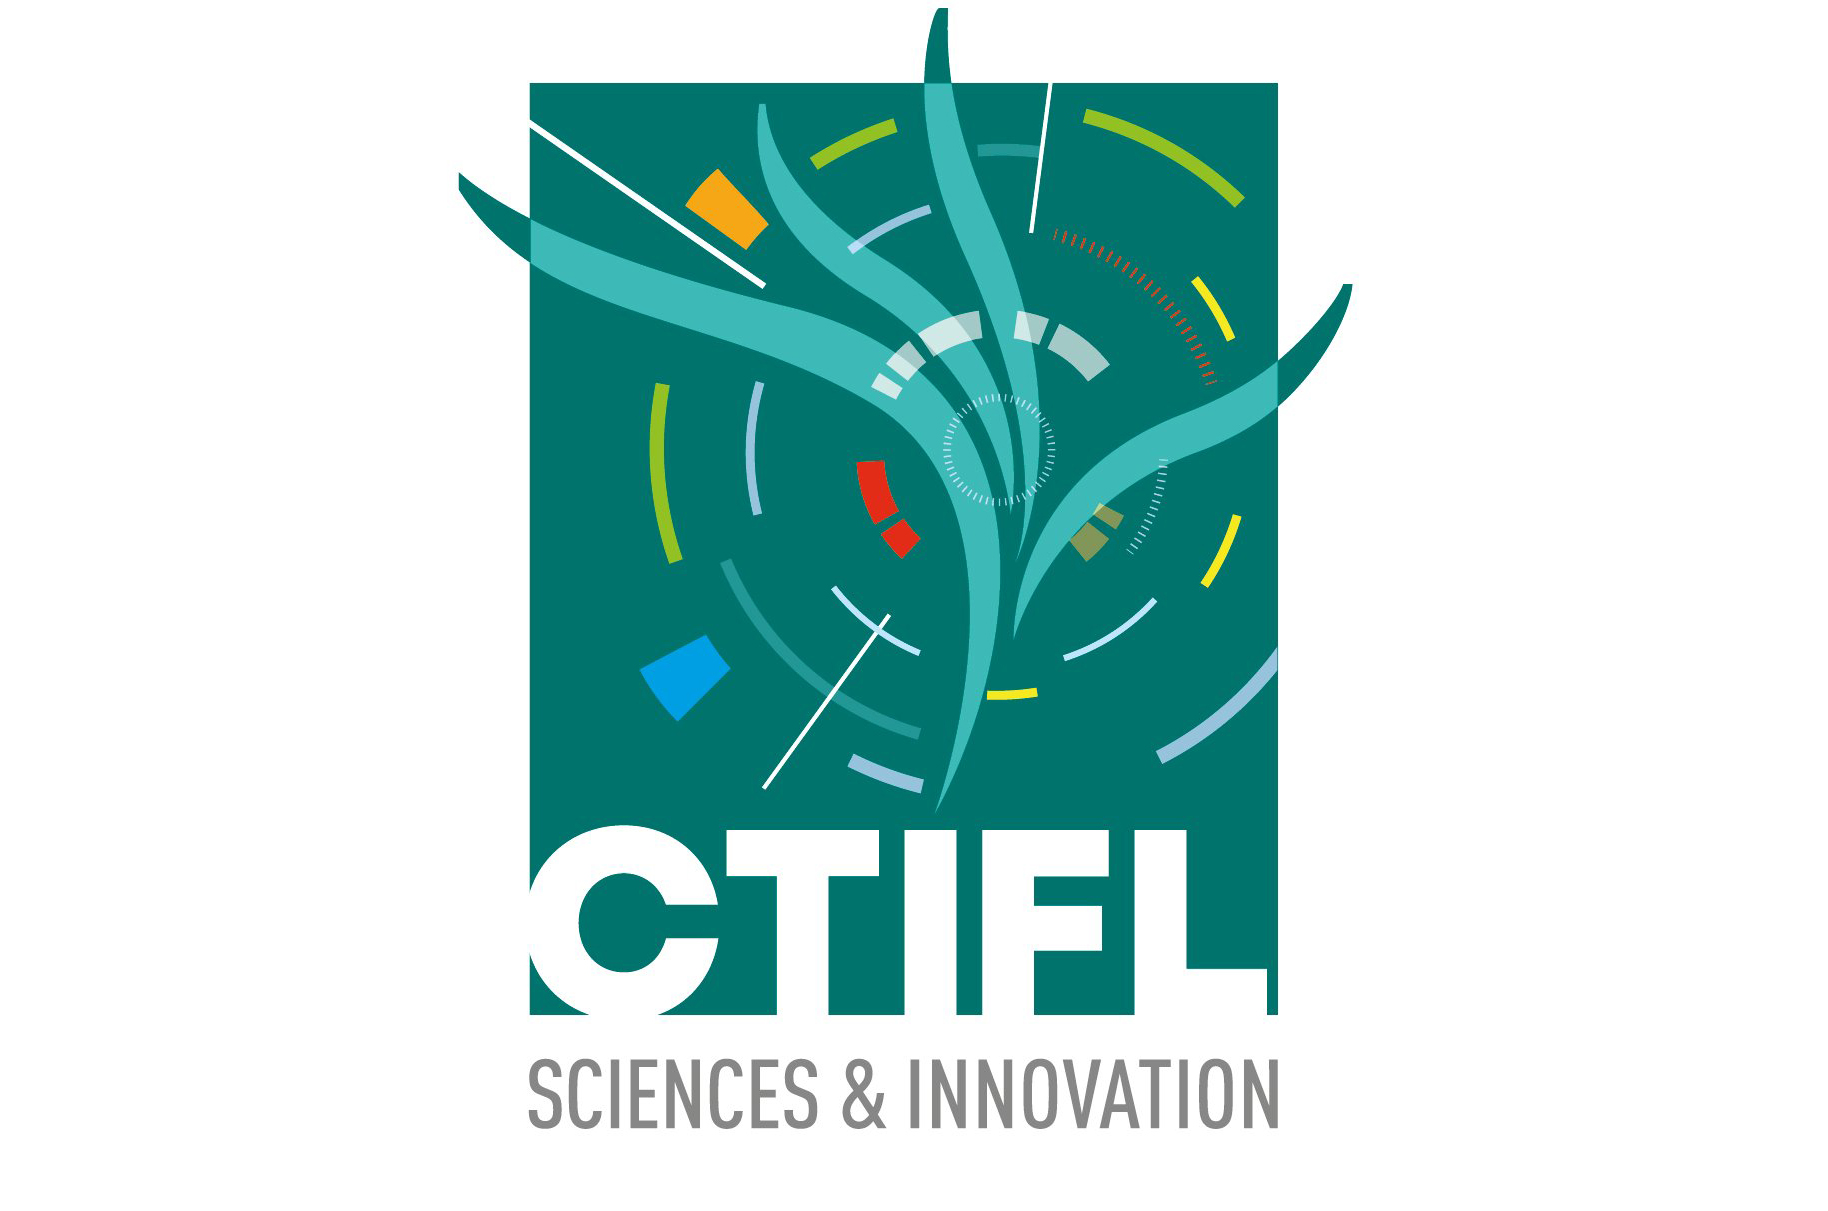 ctifl logo